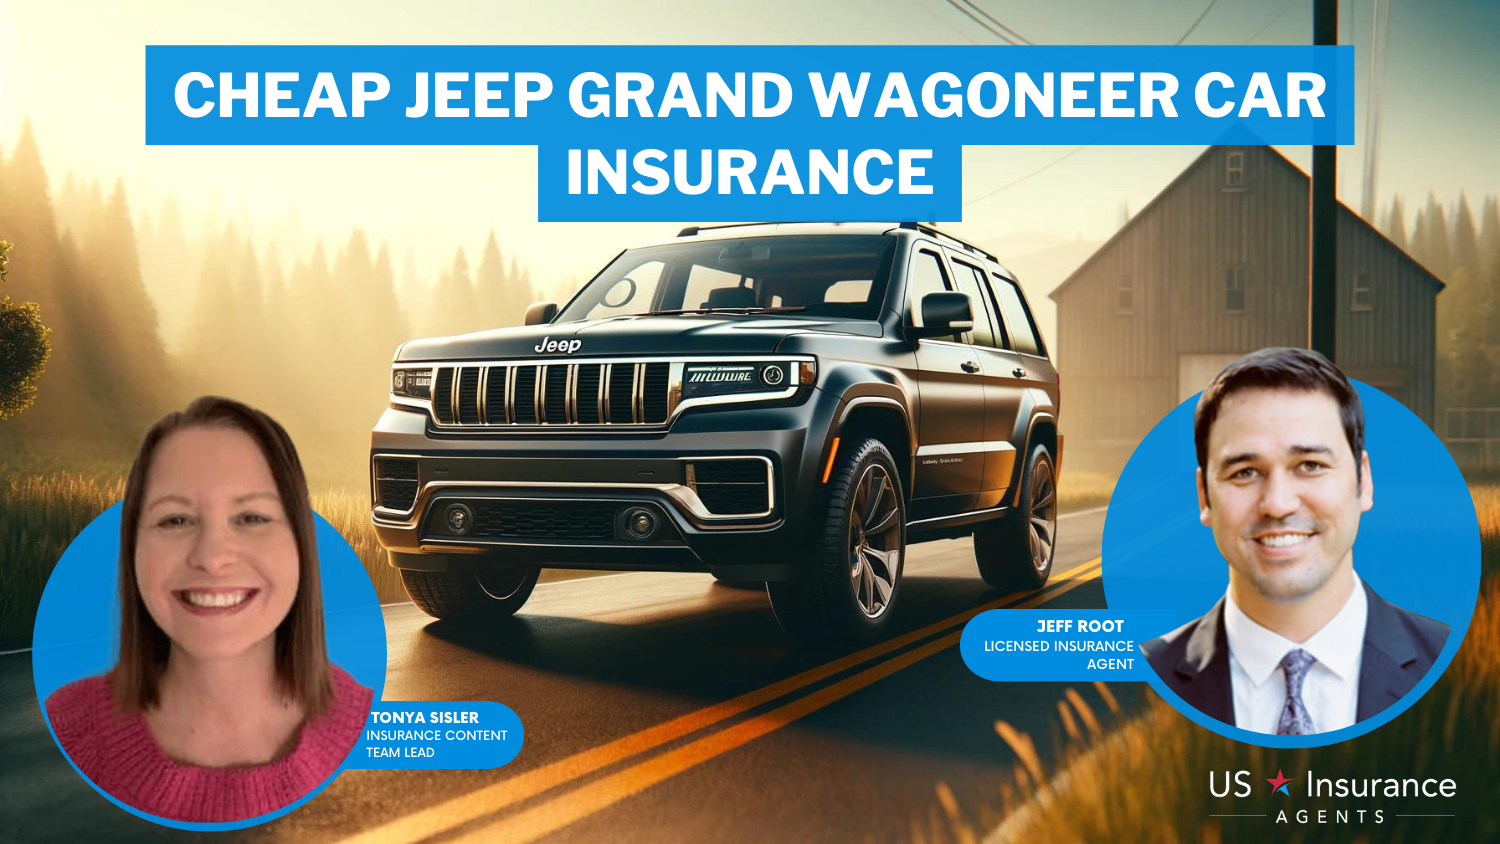 Cheap Jeep Grand Wagoneer Car Insurance: State Farm, USAA, and Travelers